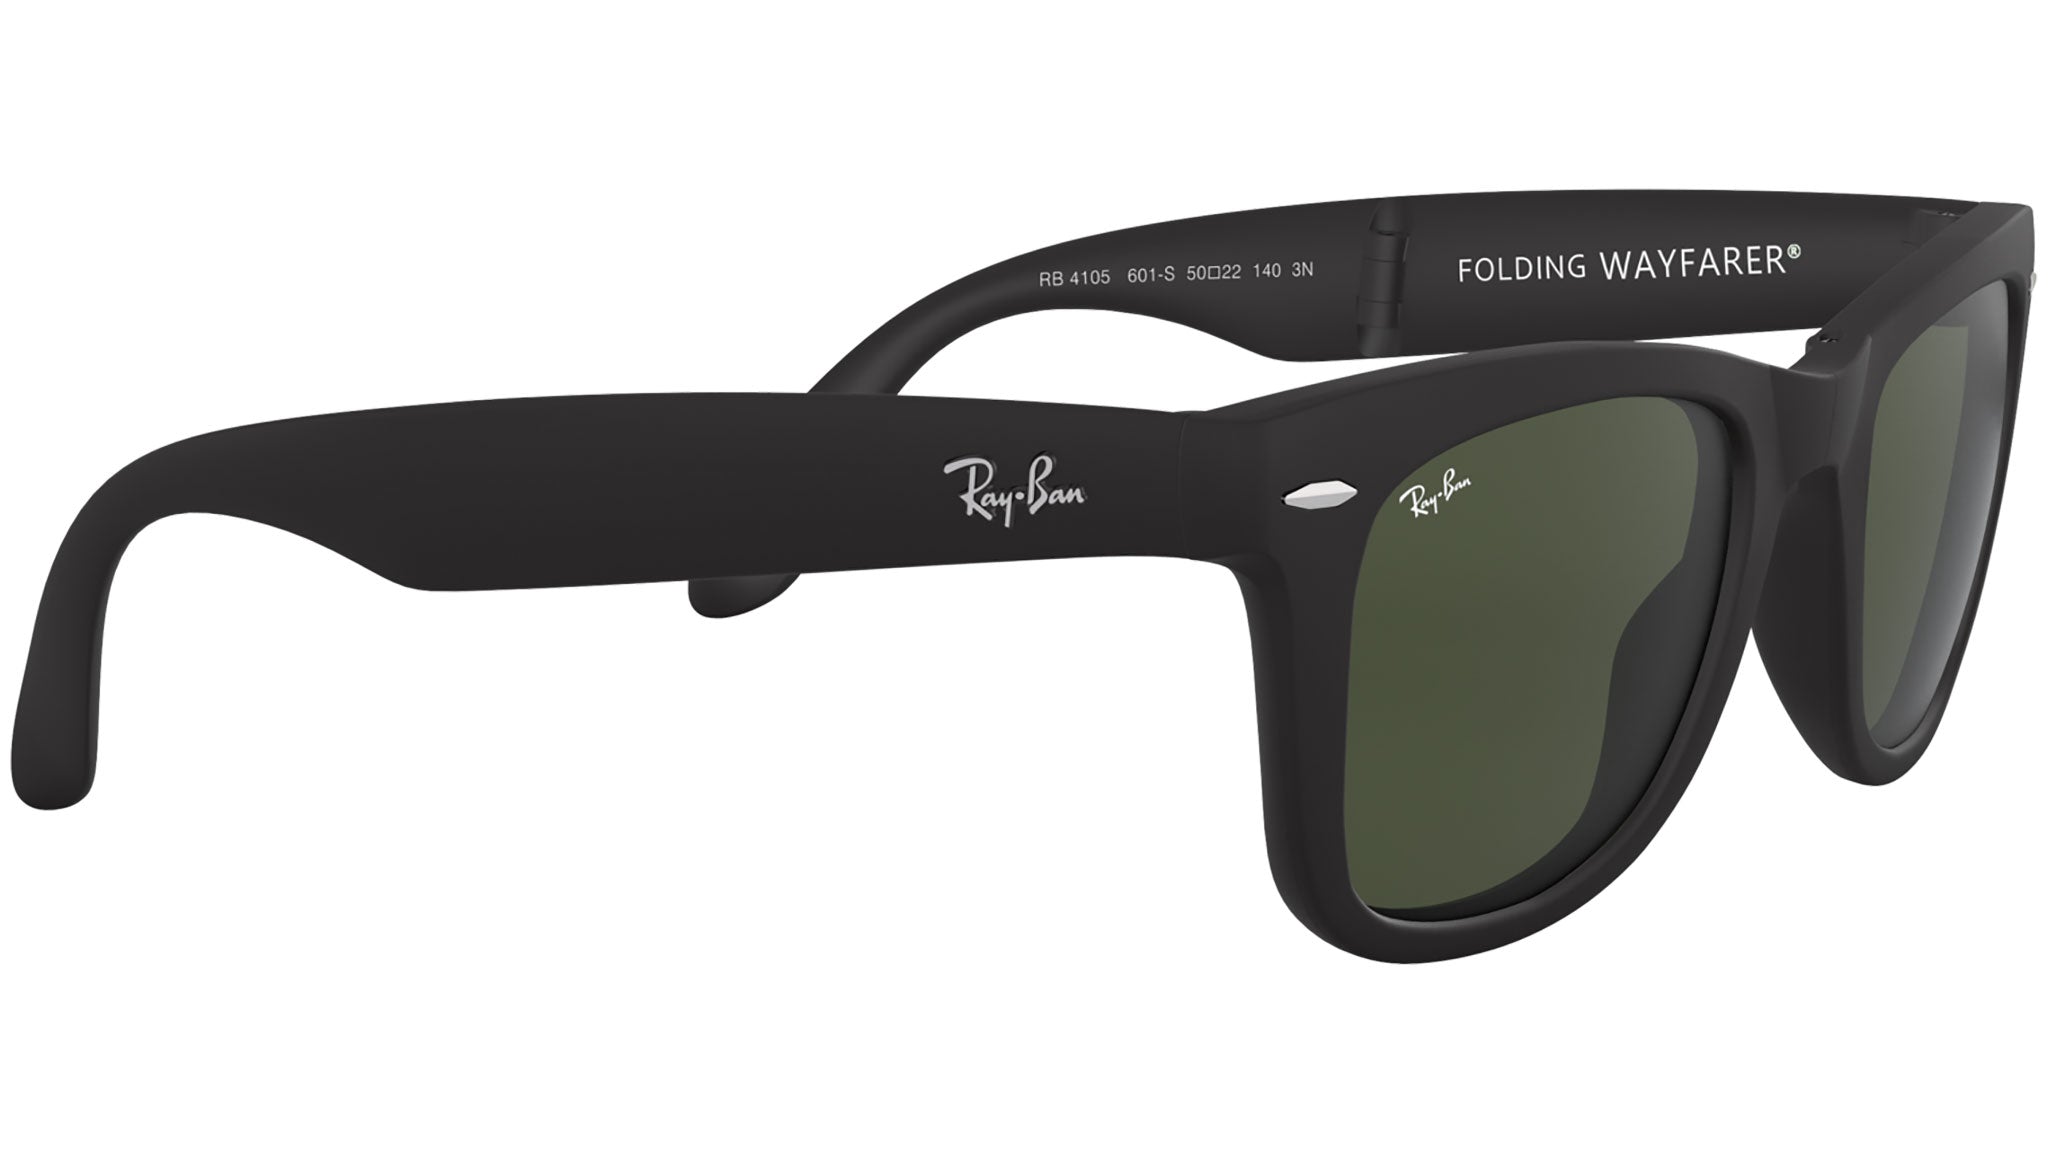 Ray-Ban Folding Wayfarer RB4105 601S Black Sunglasses